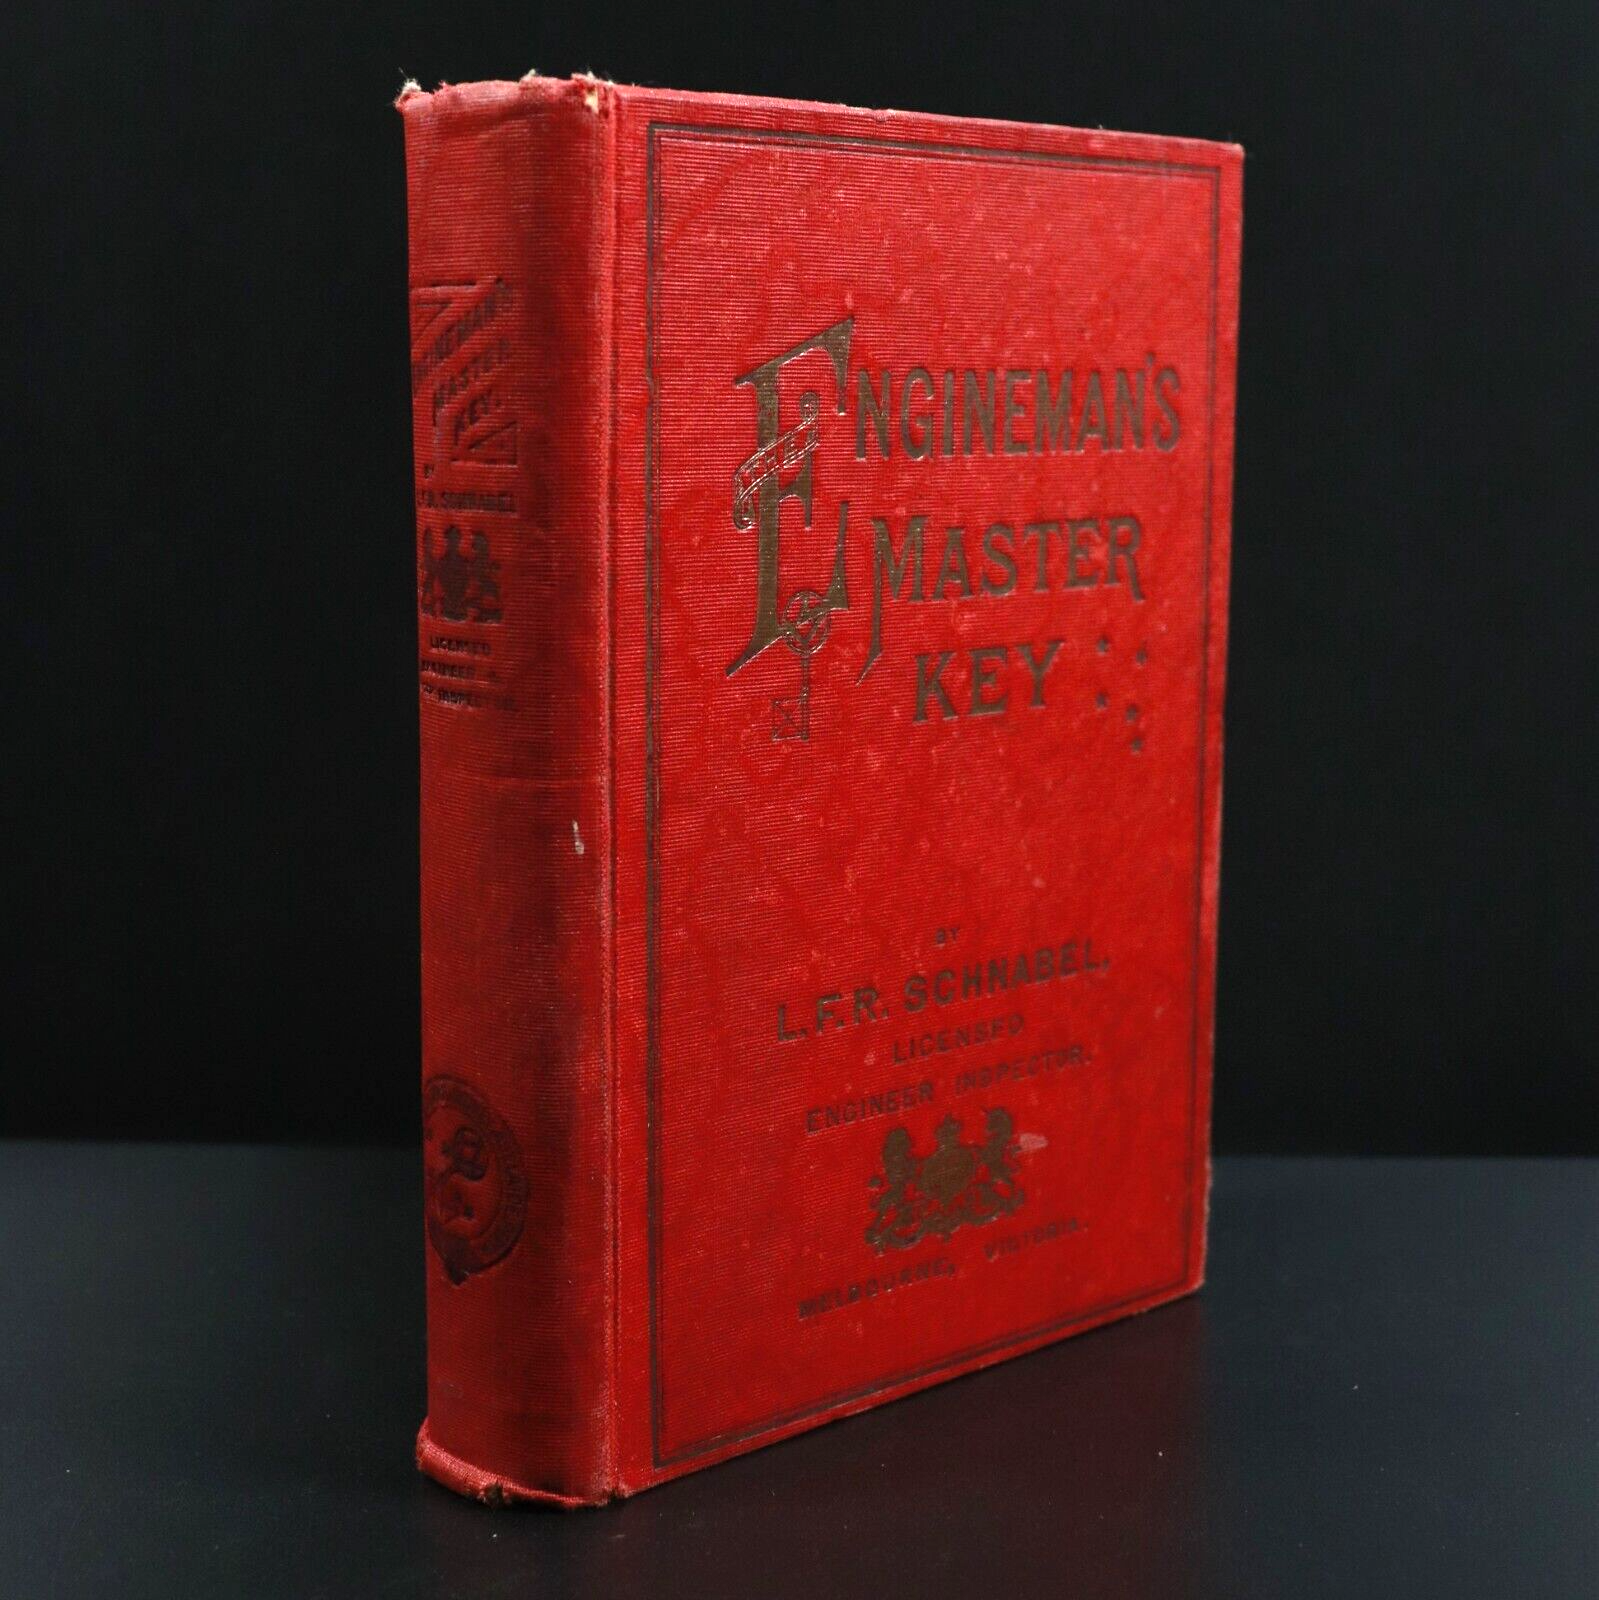 1914 The Engineman's Master Key Australian Steam Industry Train History Book